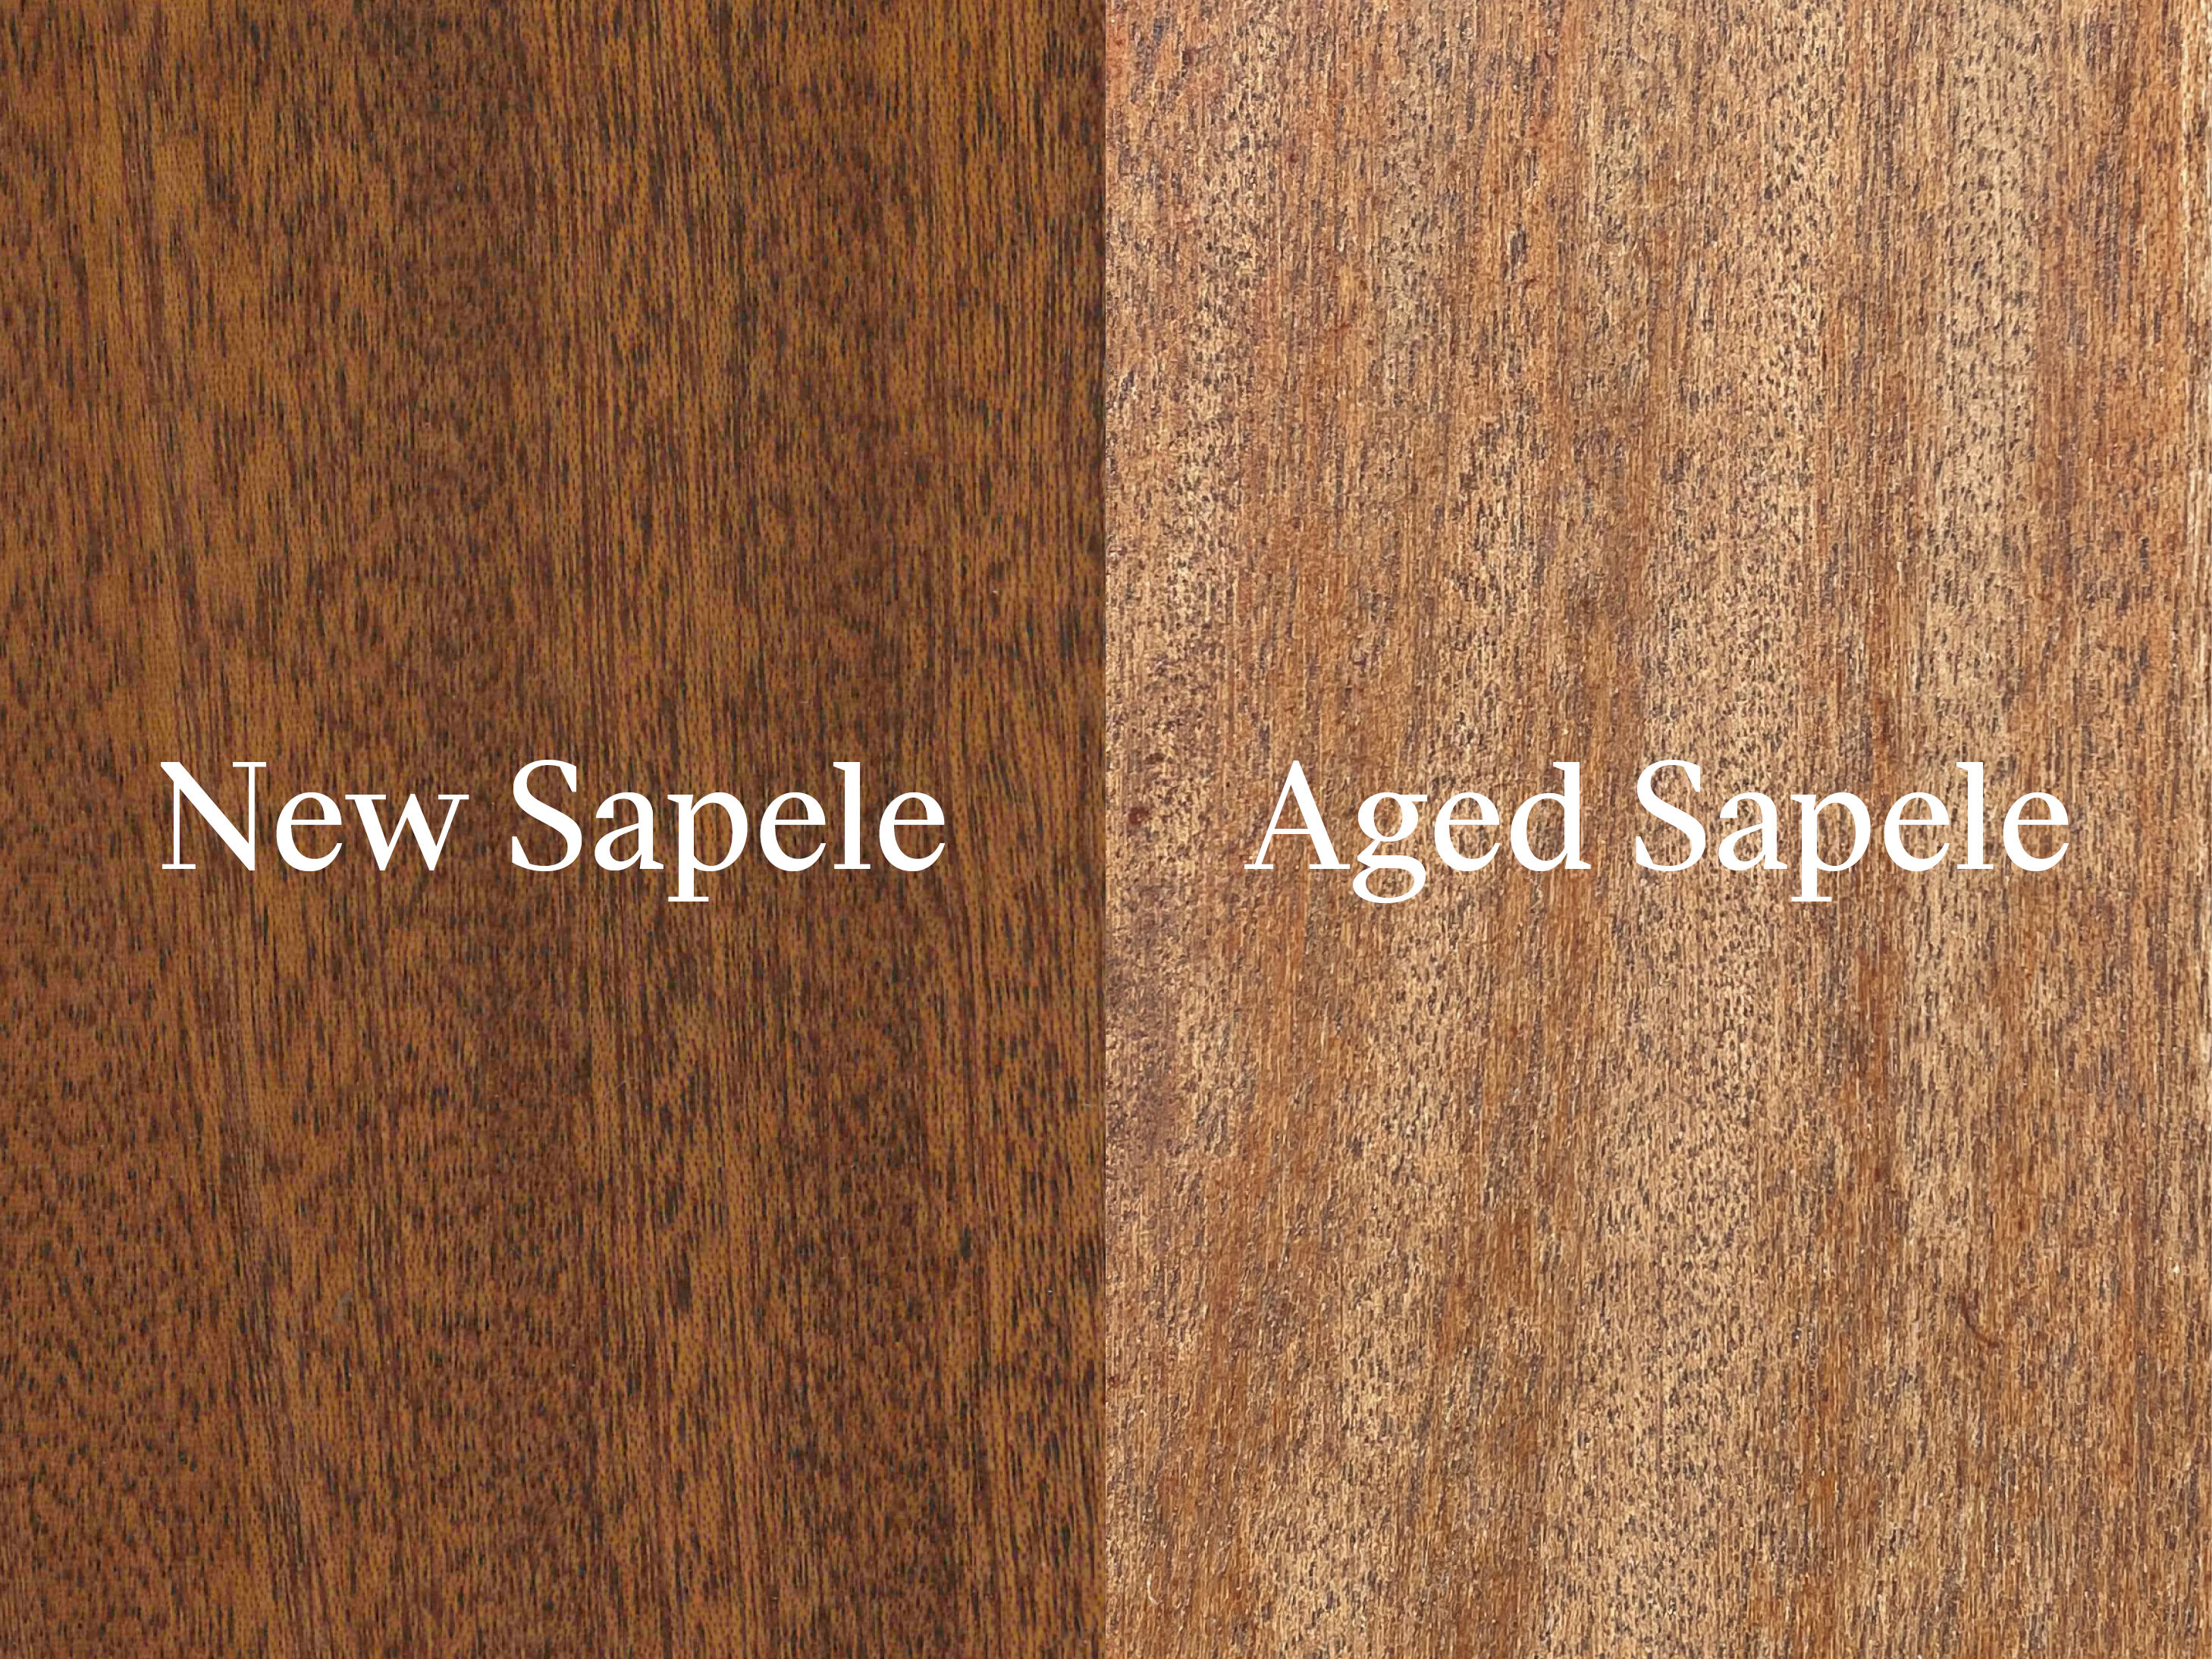 New Sapele vs Aged Sapele